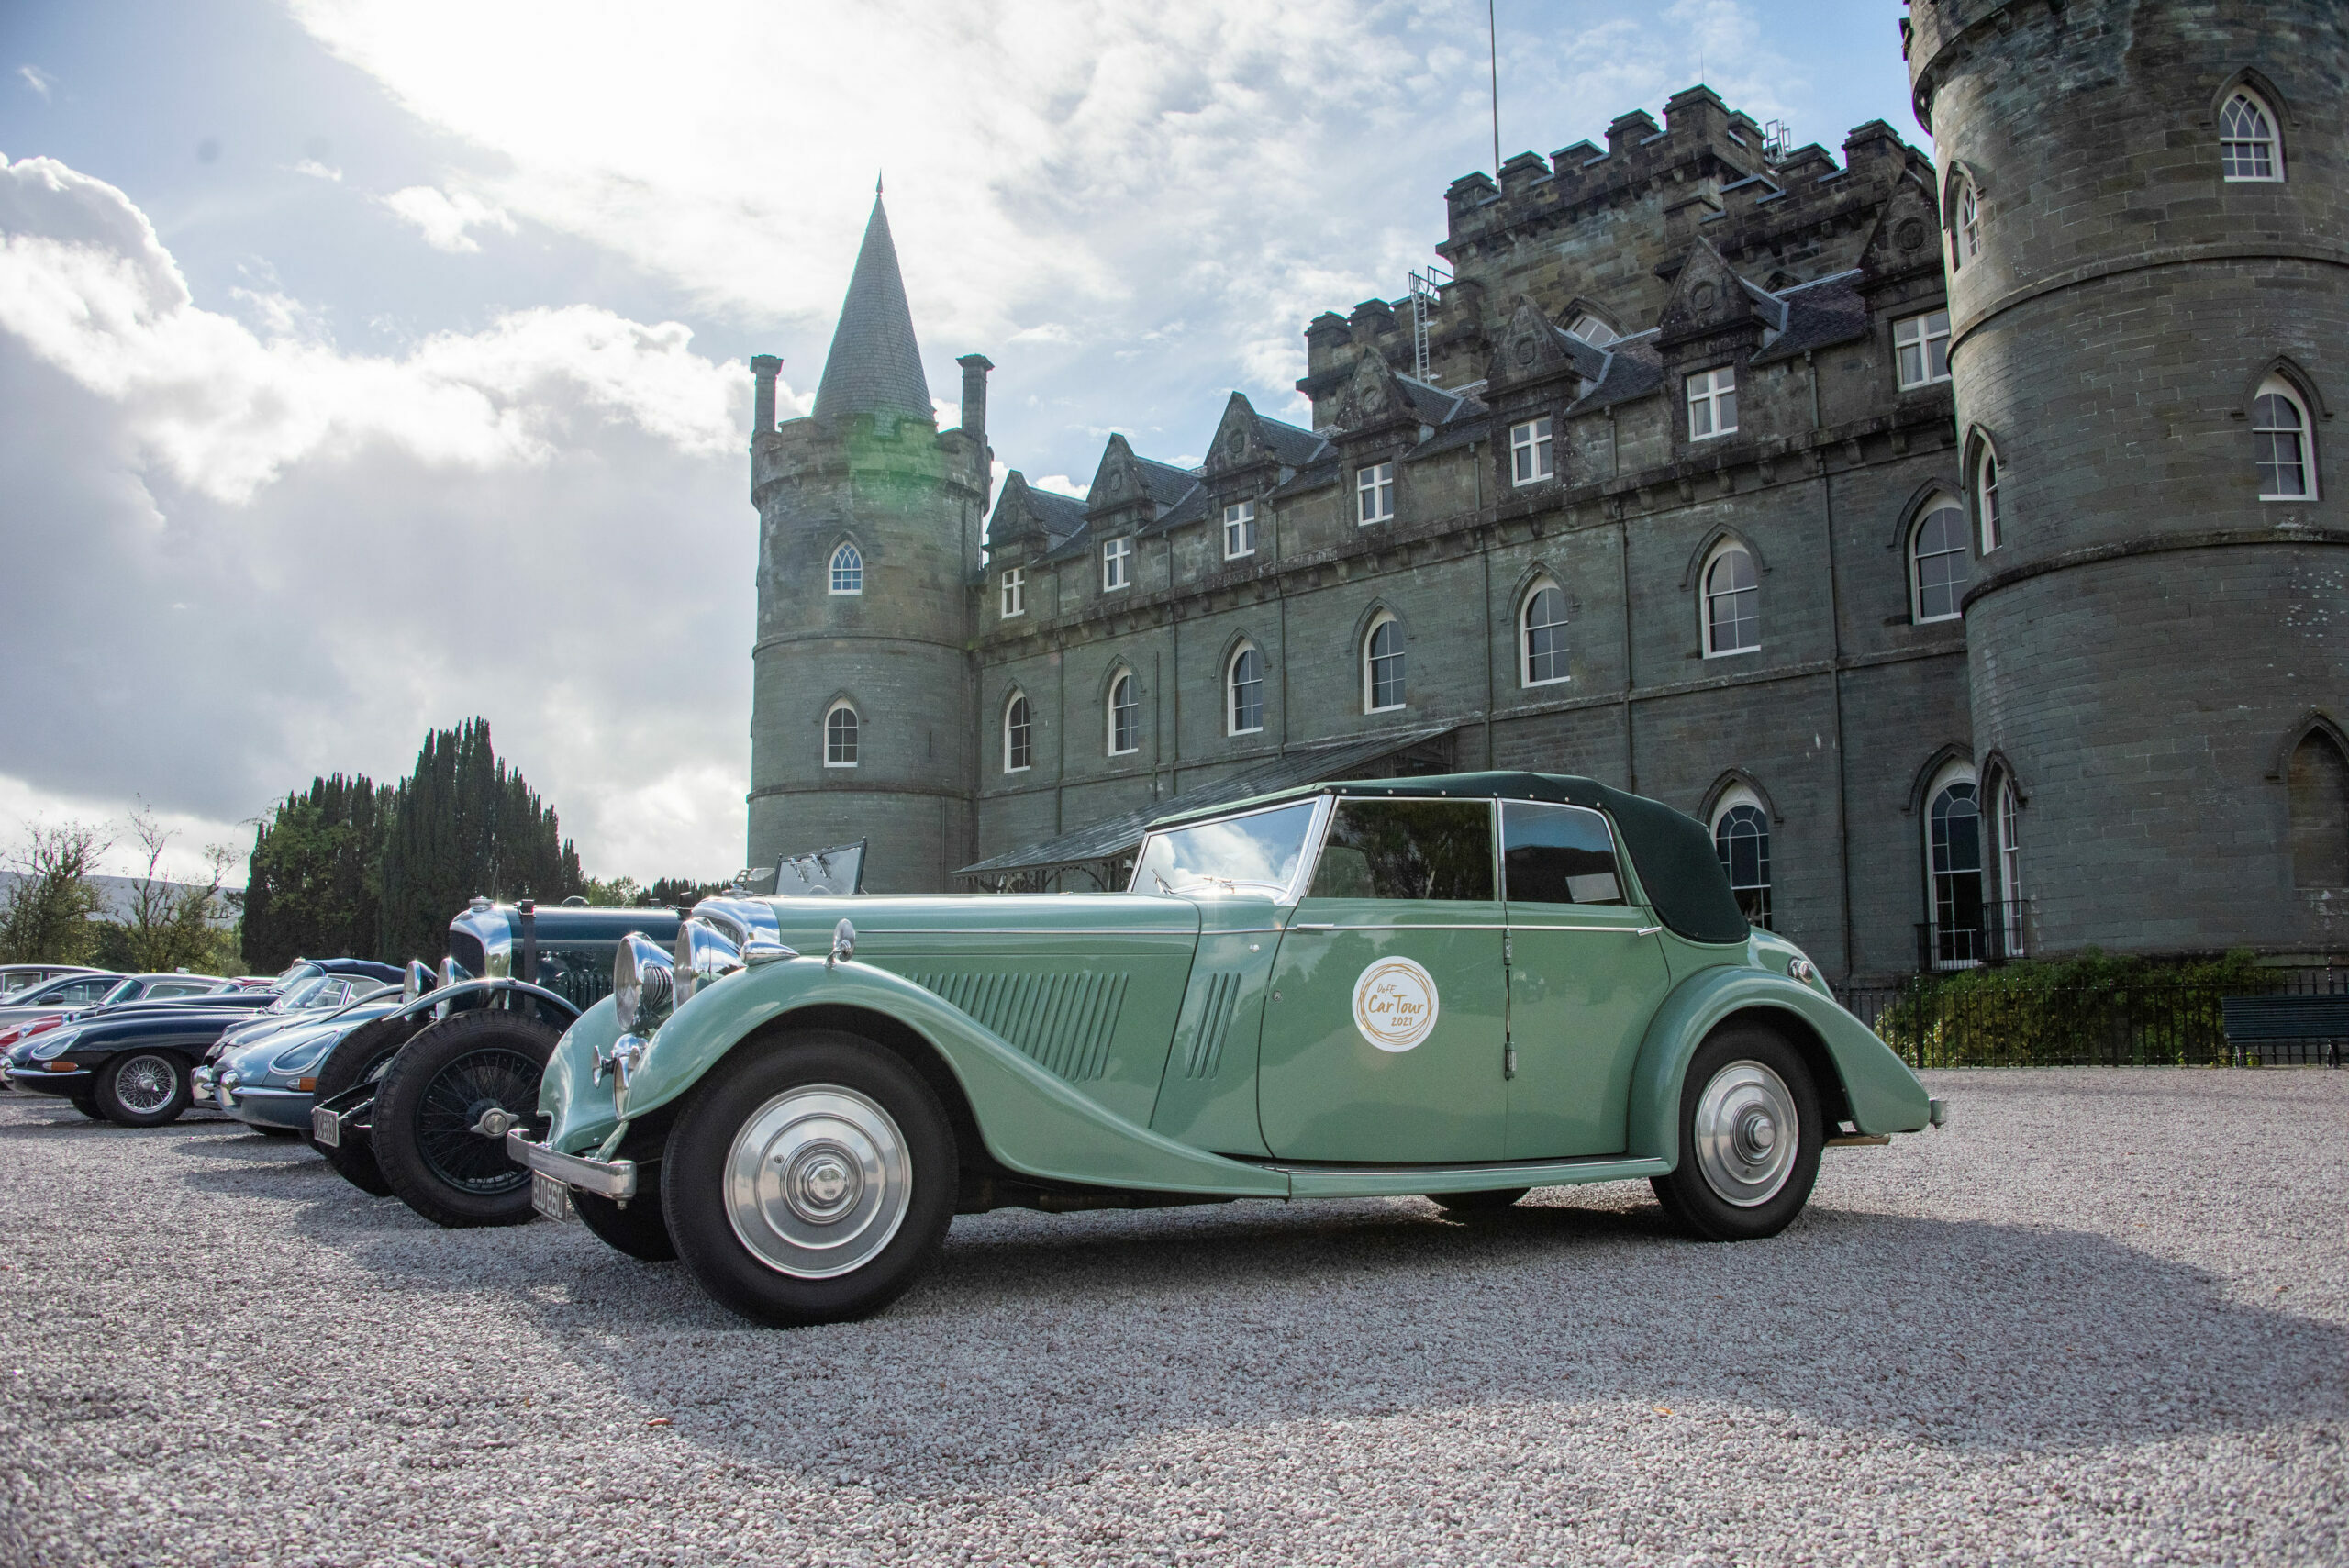 DofE Classic Car Tour The Duke of Edinburgh's Award